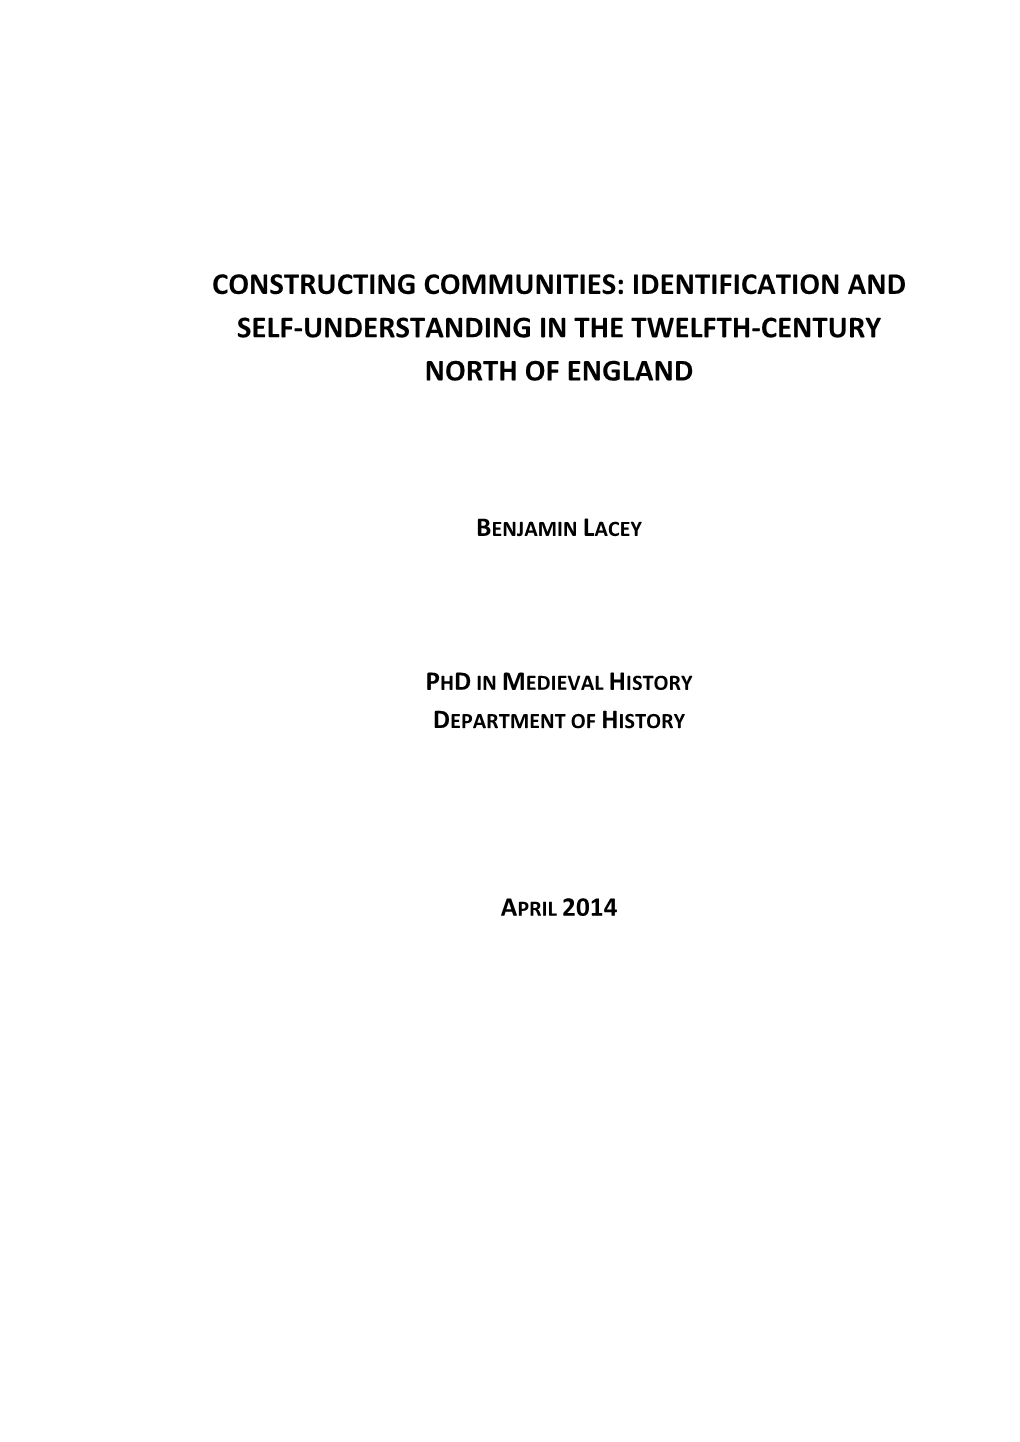 Constructing Communities: Identification and Self-Understanding in the Twelfth-Century North of England